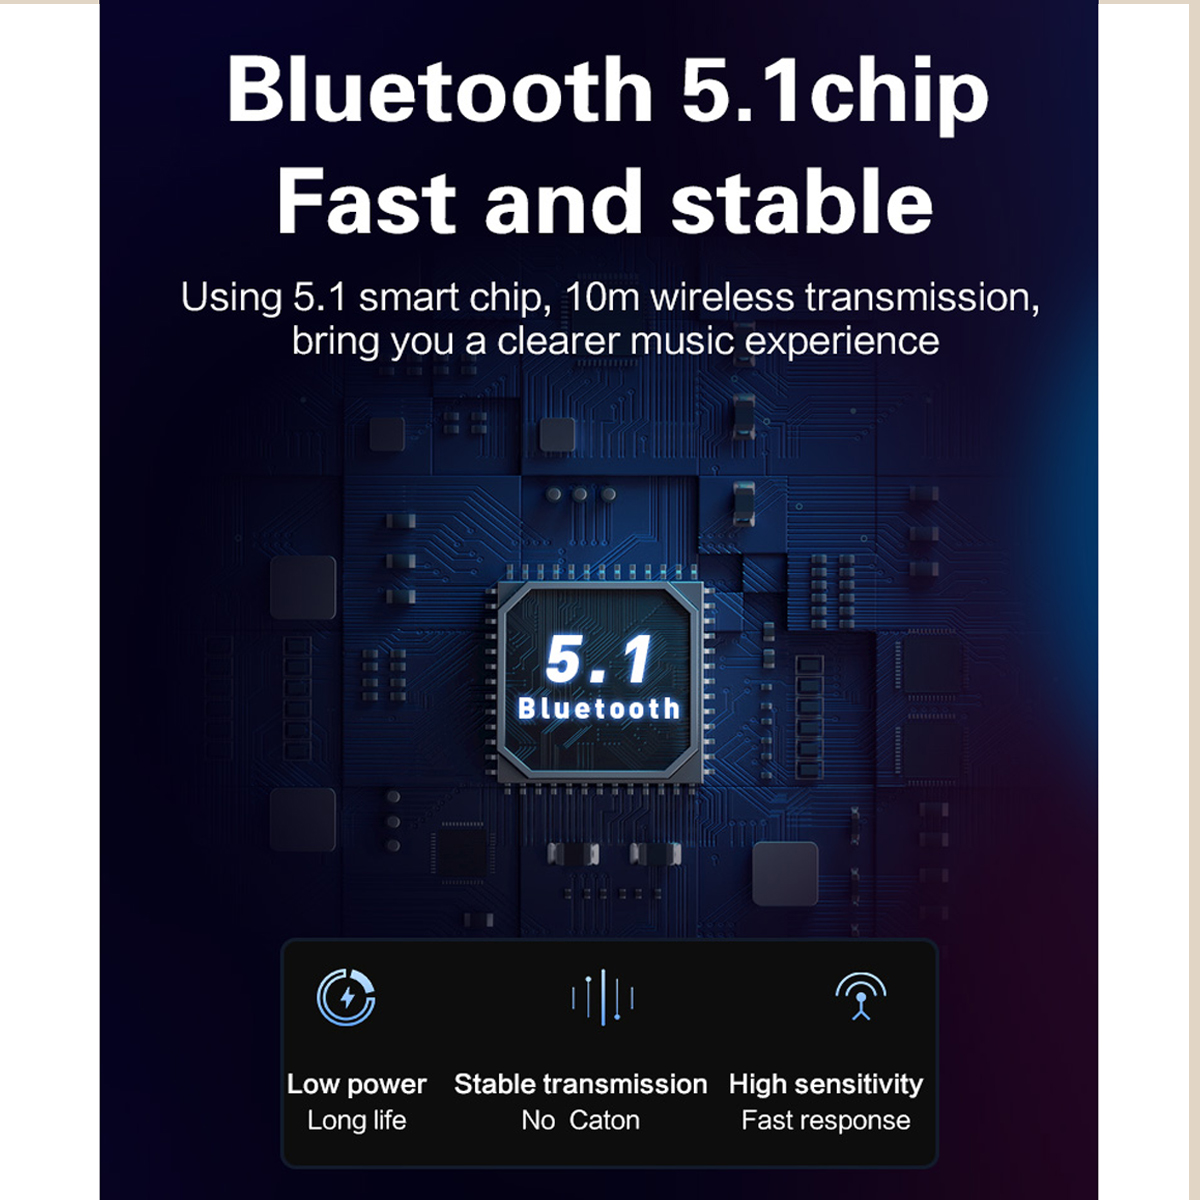 Headset, Gaming Inclusive Headset Wireless Kopfhörer Over-ear Stirnband All Bluetooth Blau Bluetooth SYNTEK Blaues Beleuchtetes Headset